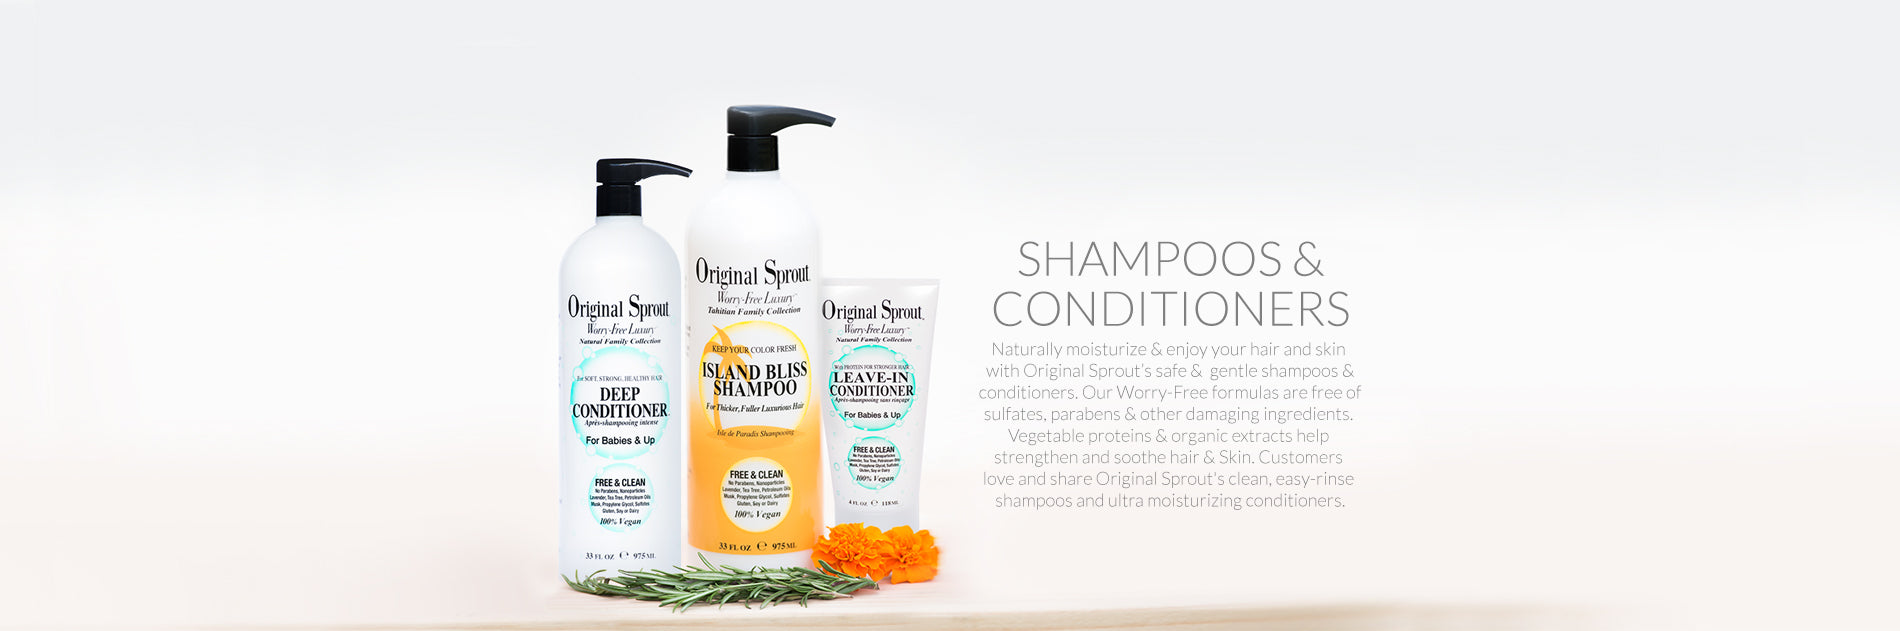 shampoo conditioners